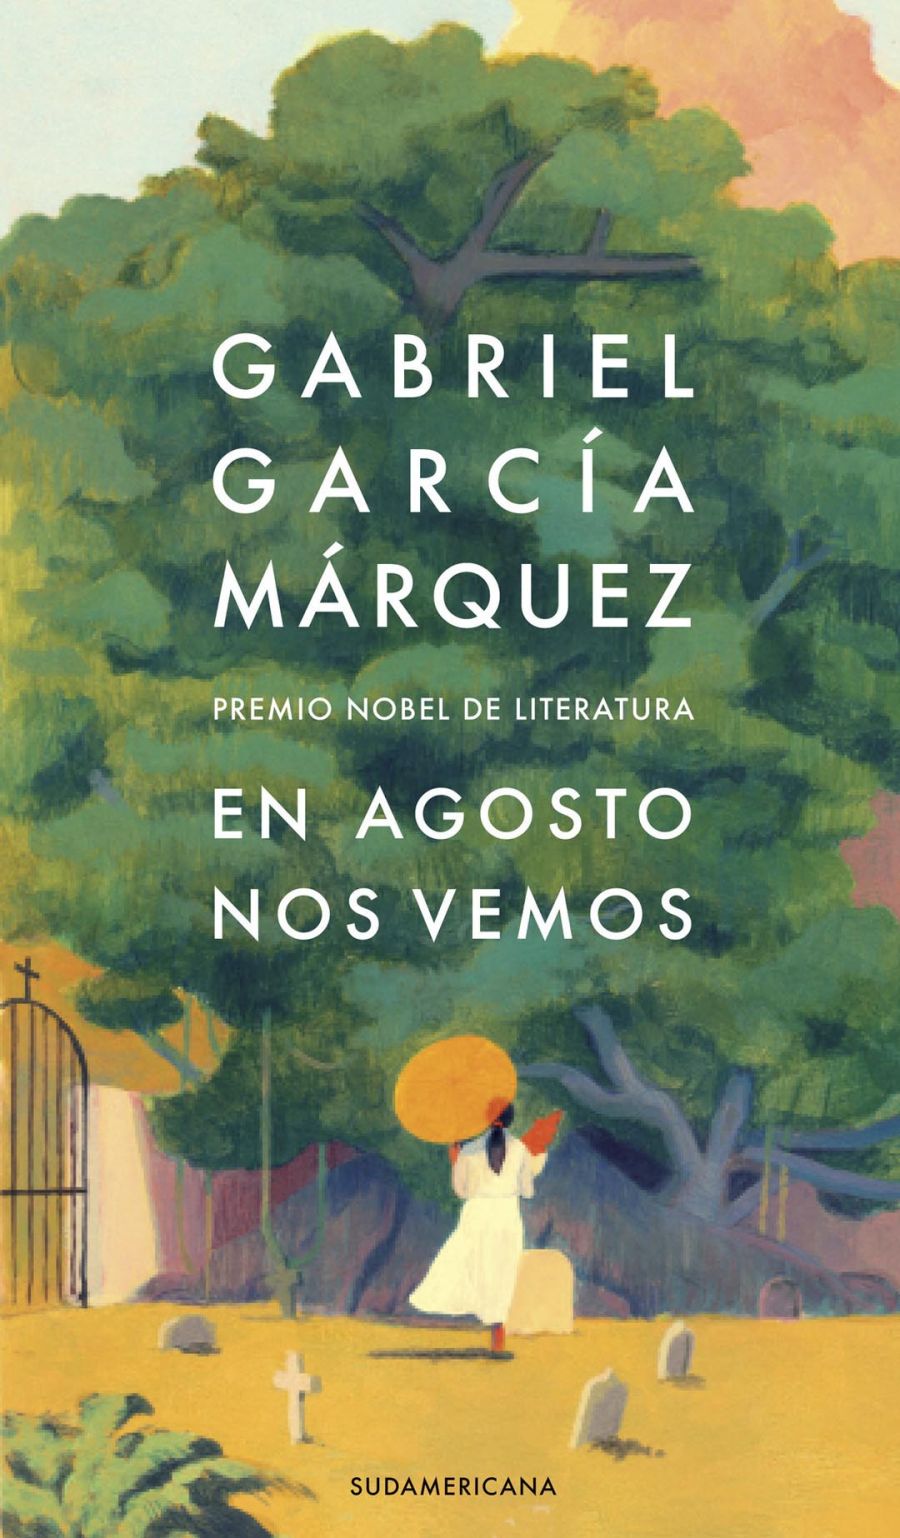 Publican novela inédita de Gabriel García Márquez